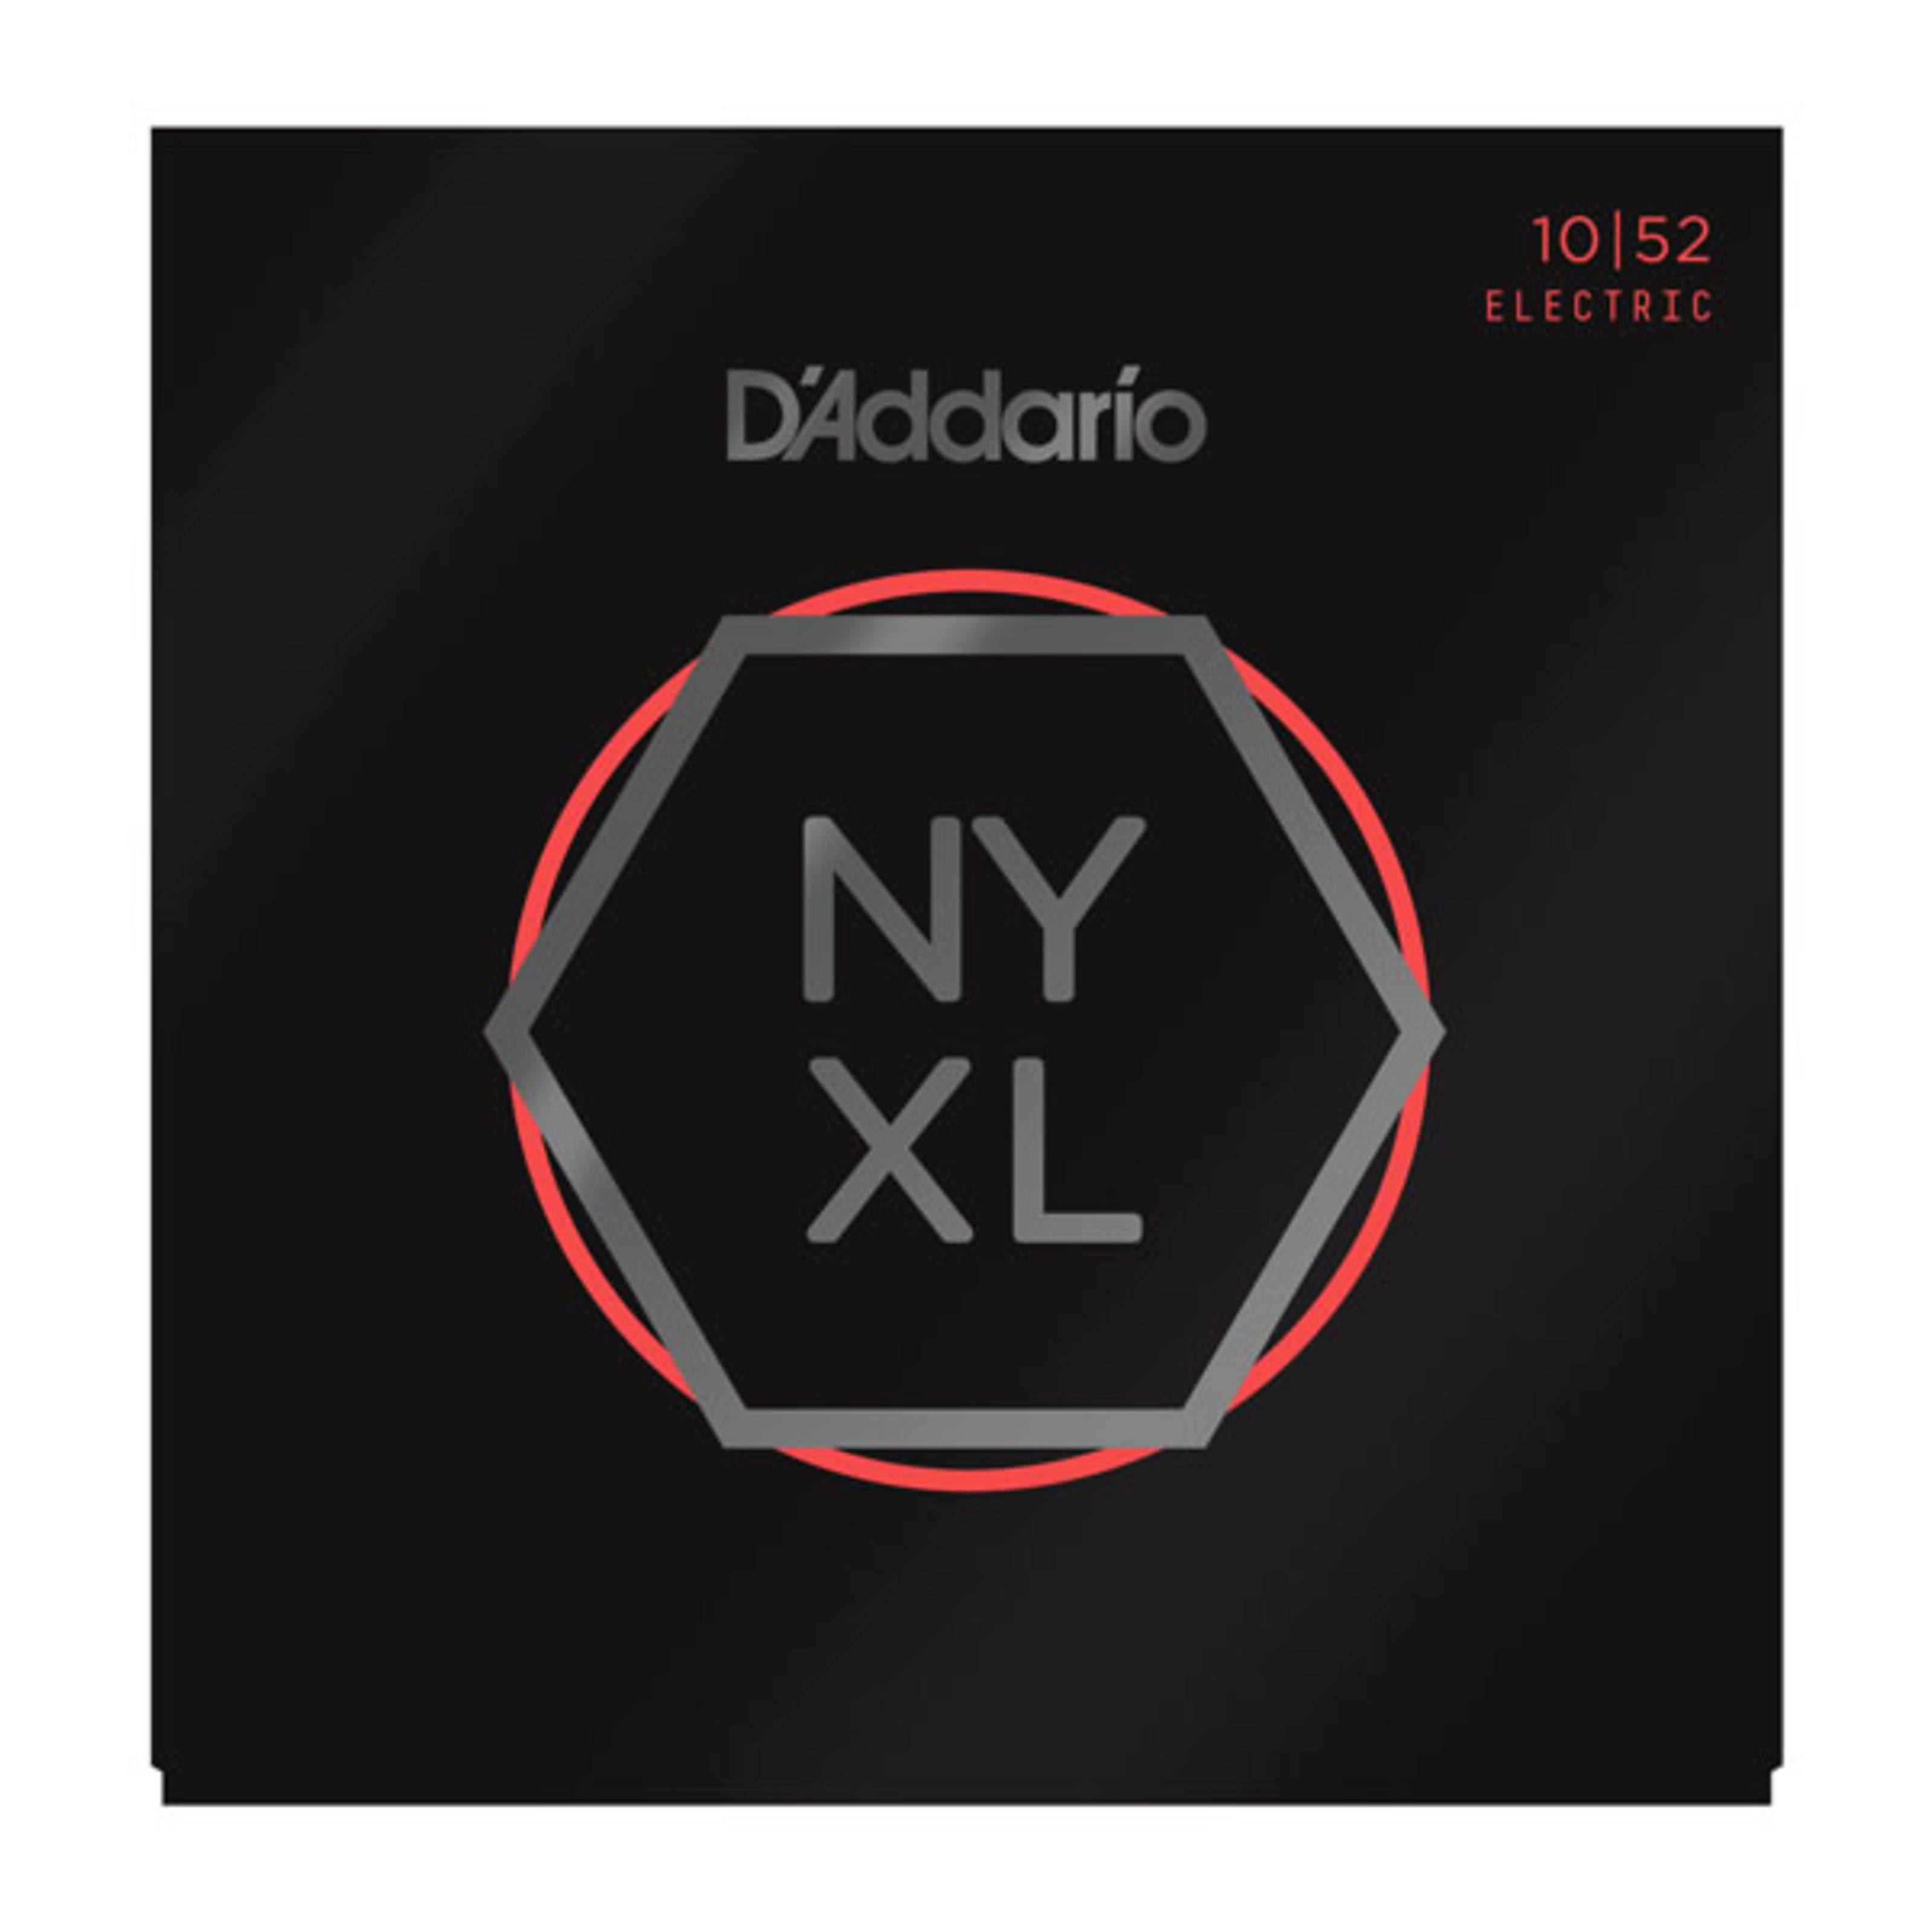 D'addario NYXL1052 Nickel Wound Electric Guitar Strings - Light Top & Heavy Bottom, x6